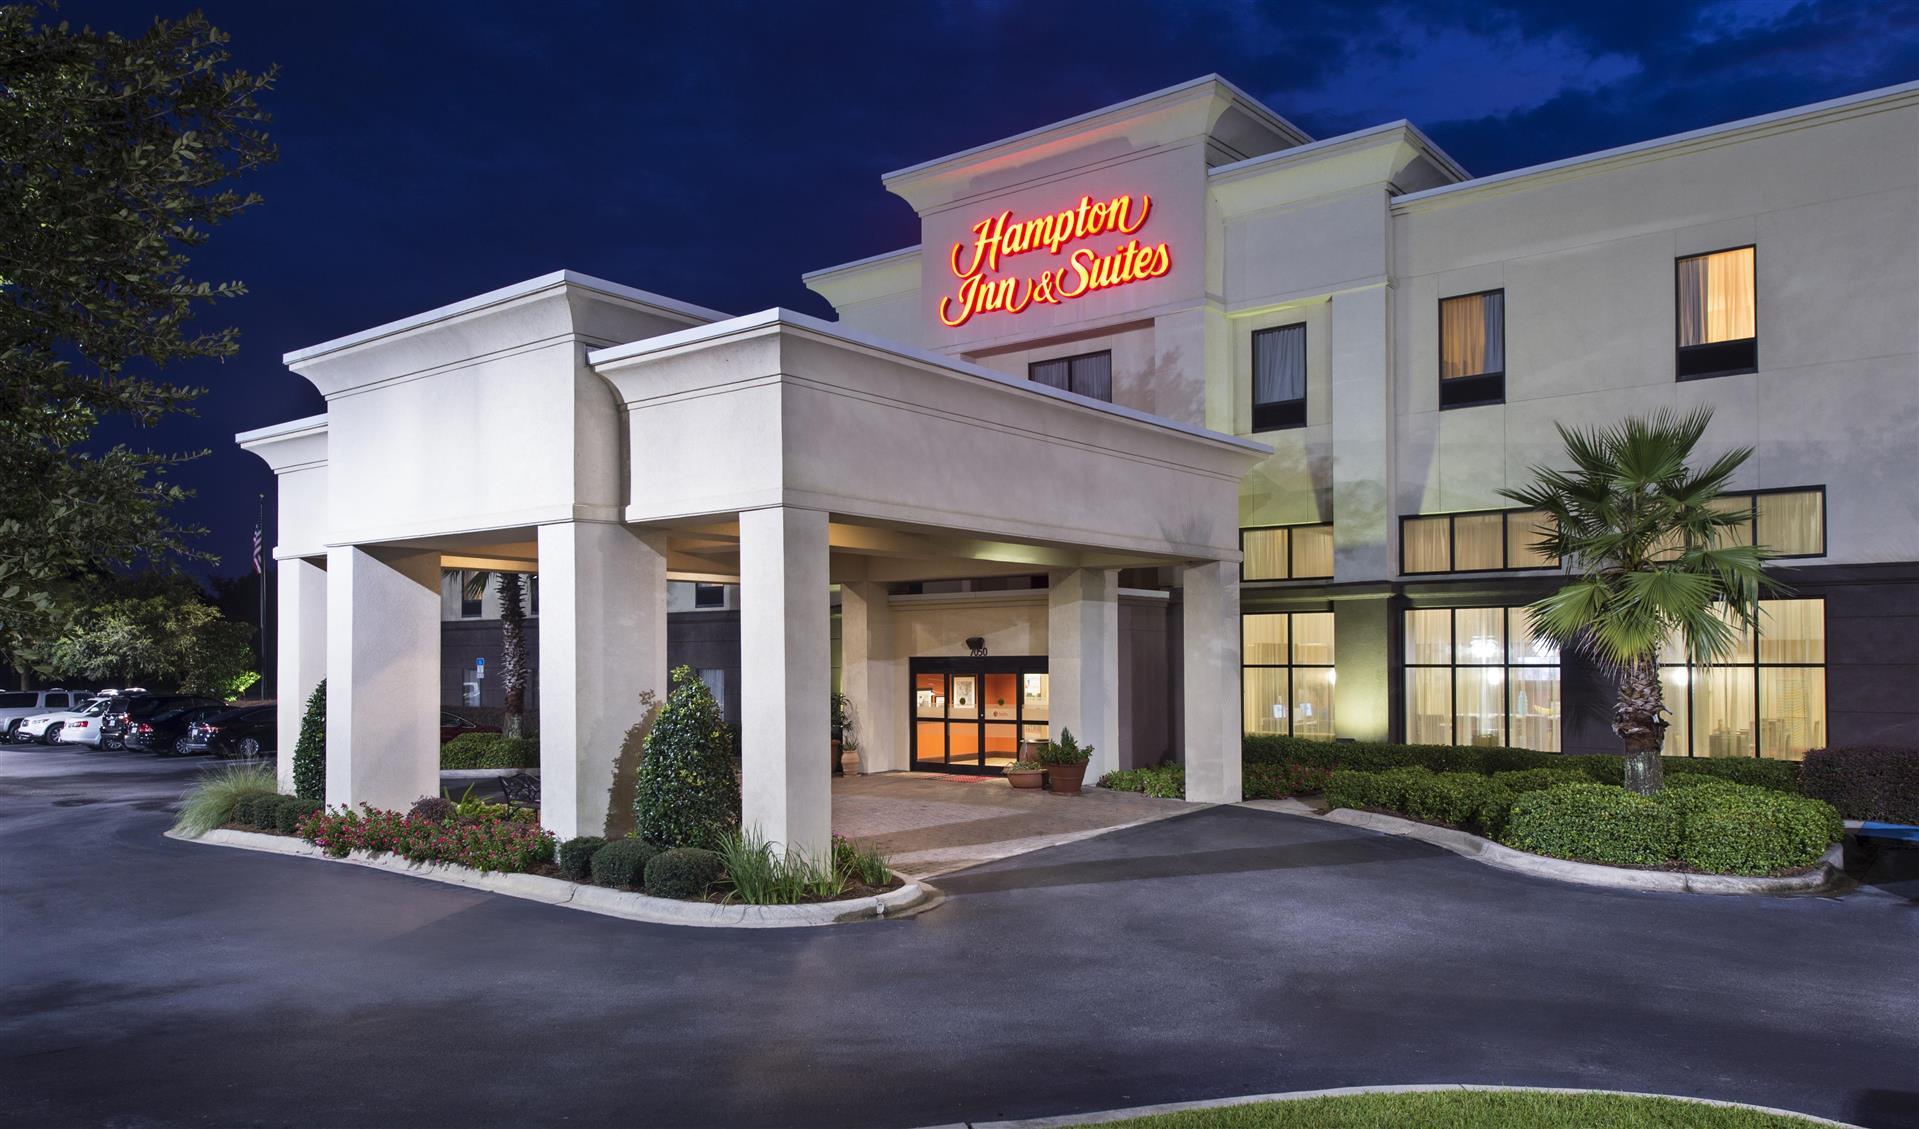 Hampton Inn & Suites Pensacola I-10 North at University Town Plaza in Pensacola, FL